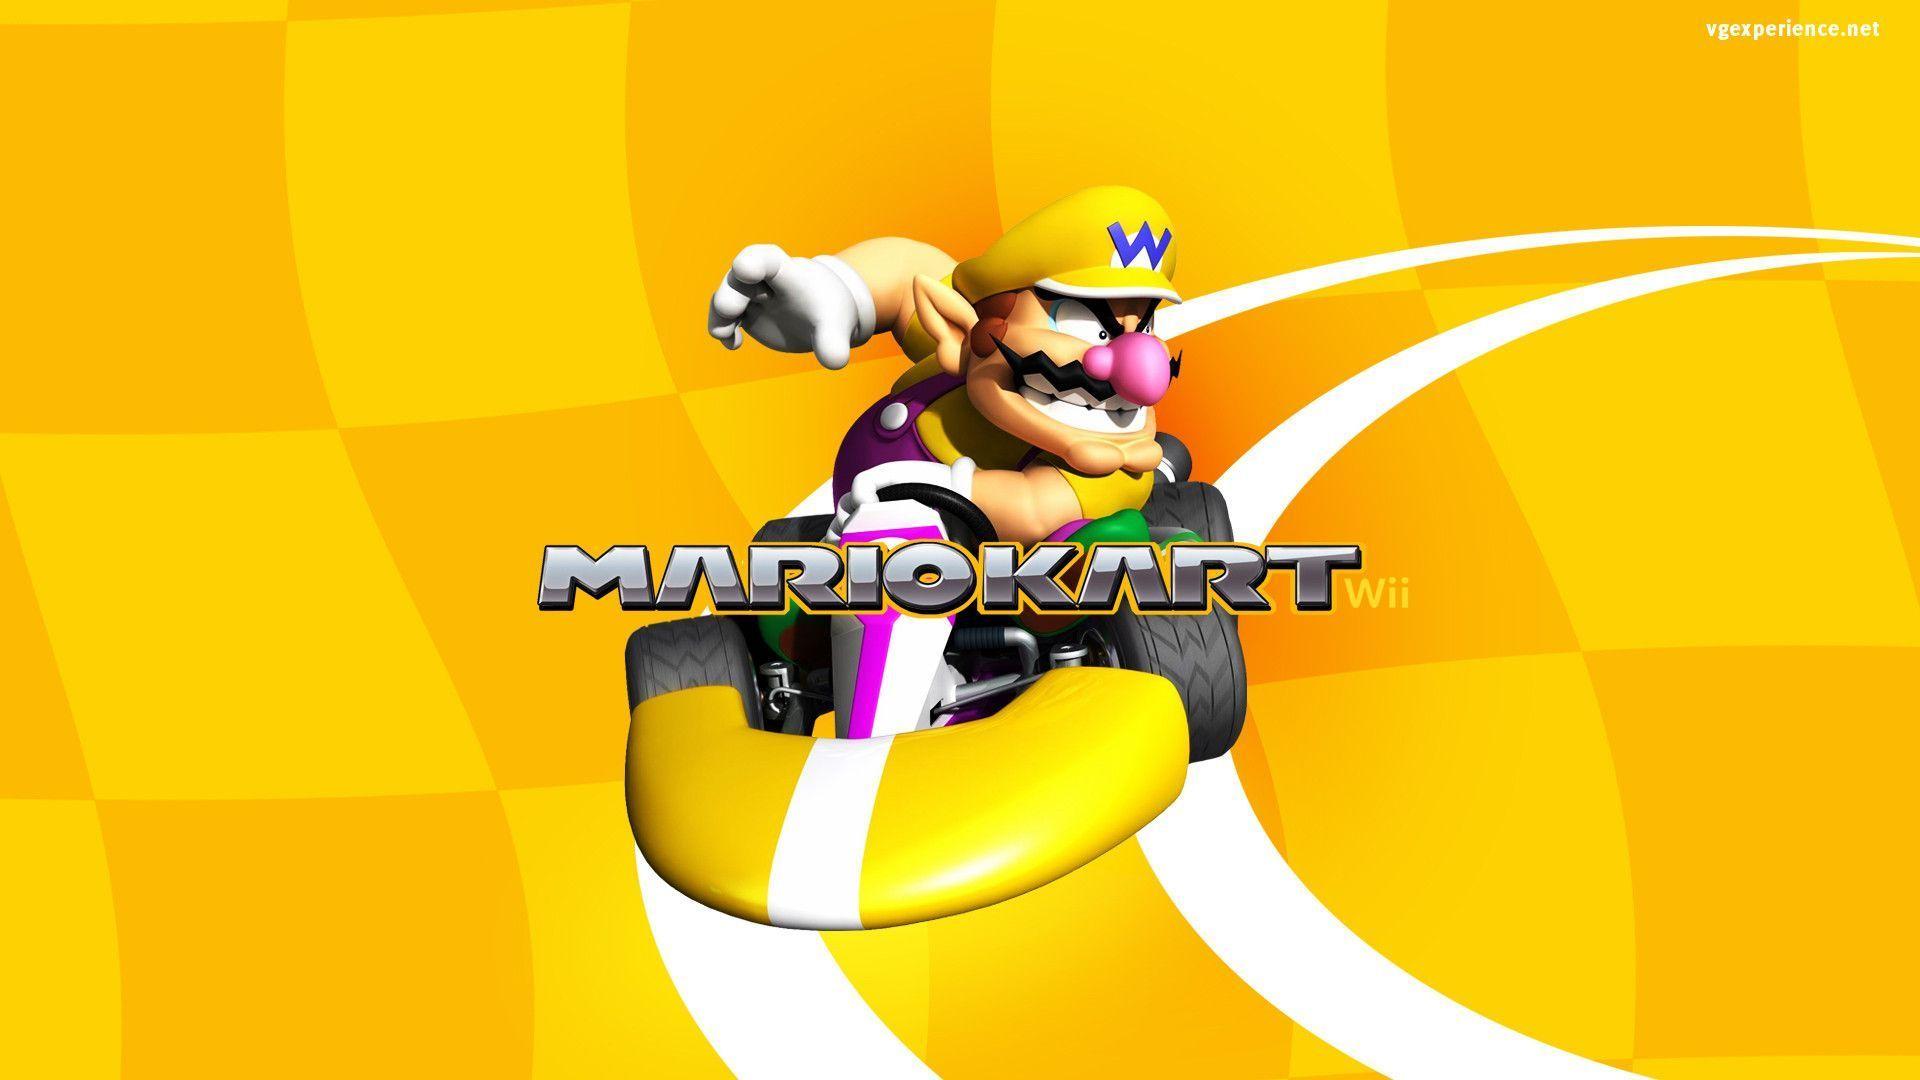 HD Wii Wallpapers, Mario Kart, Super Mario Galaxy 2, Toad